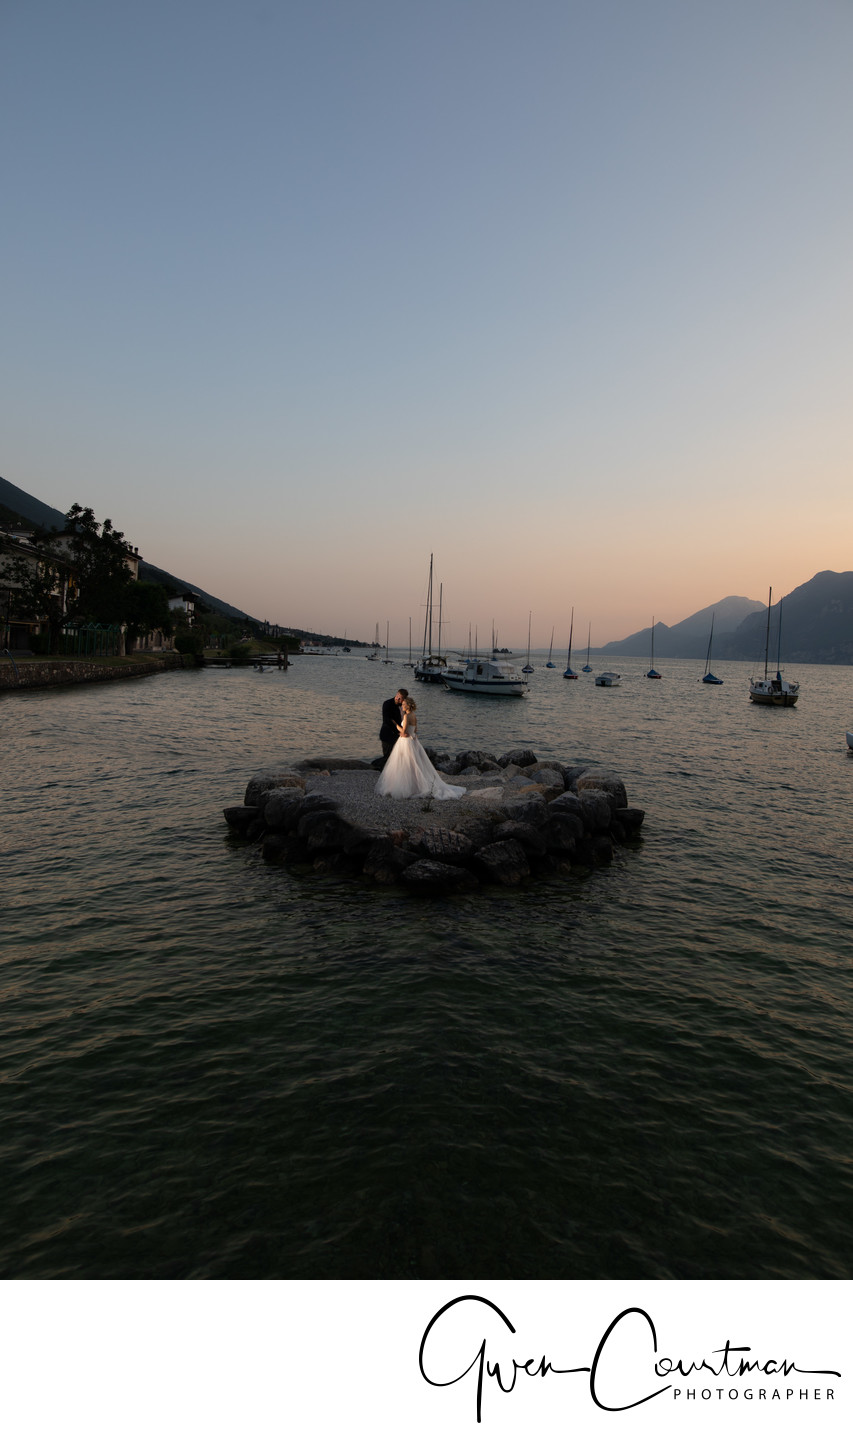 Perfect wedding photos in Italy.